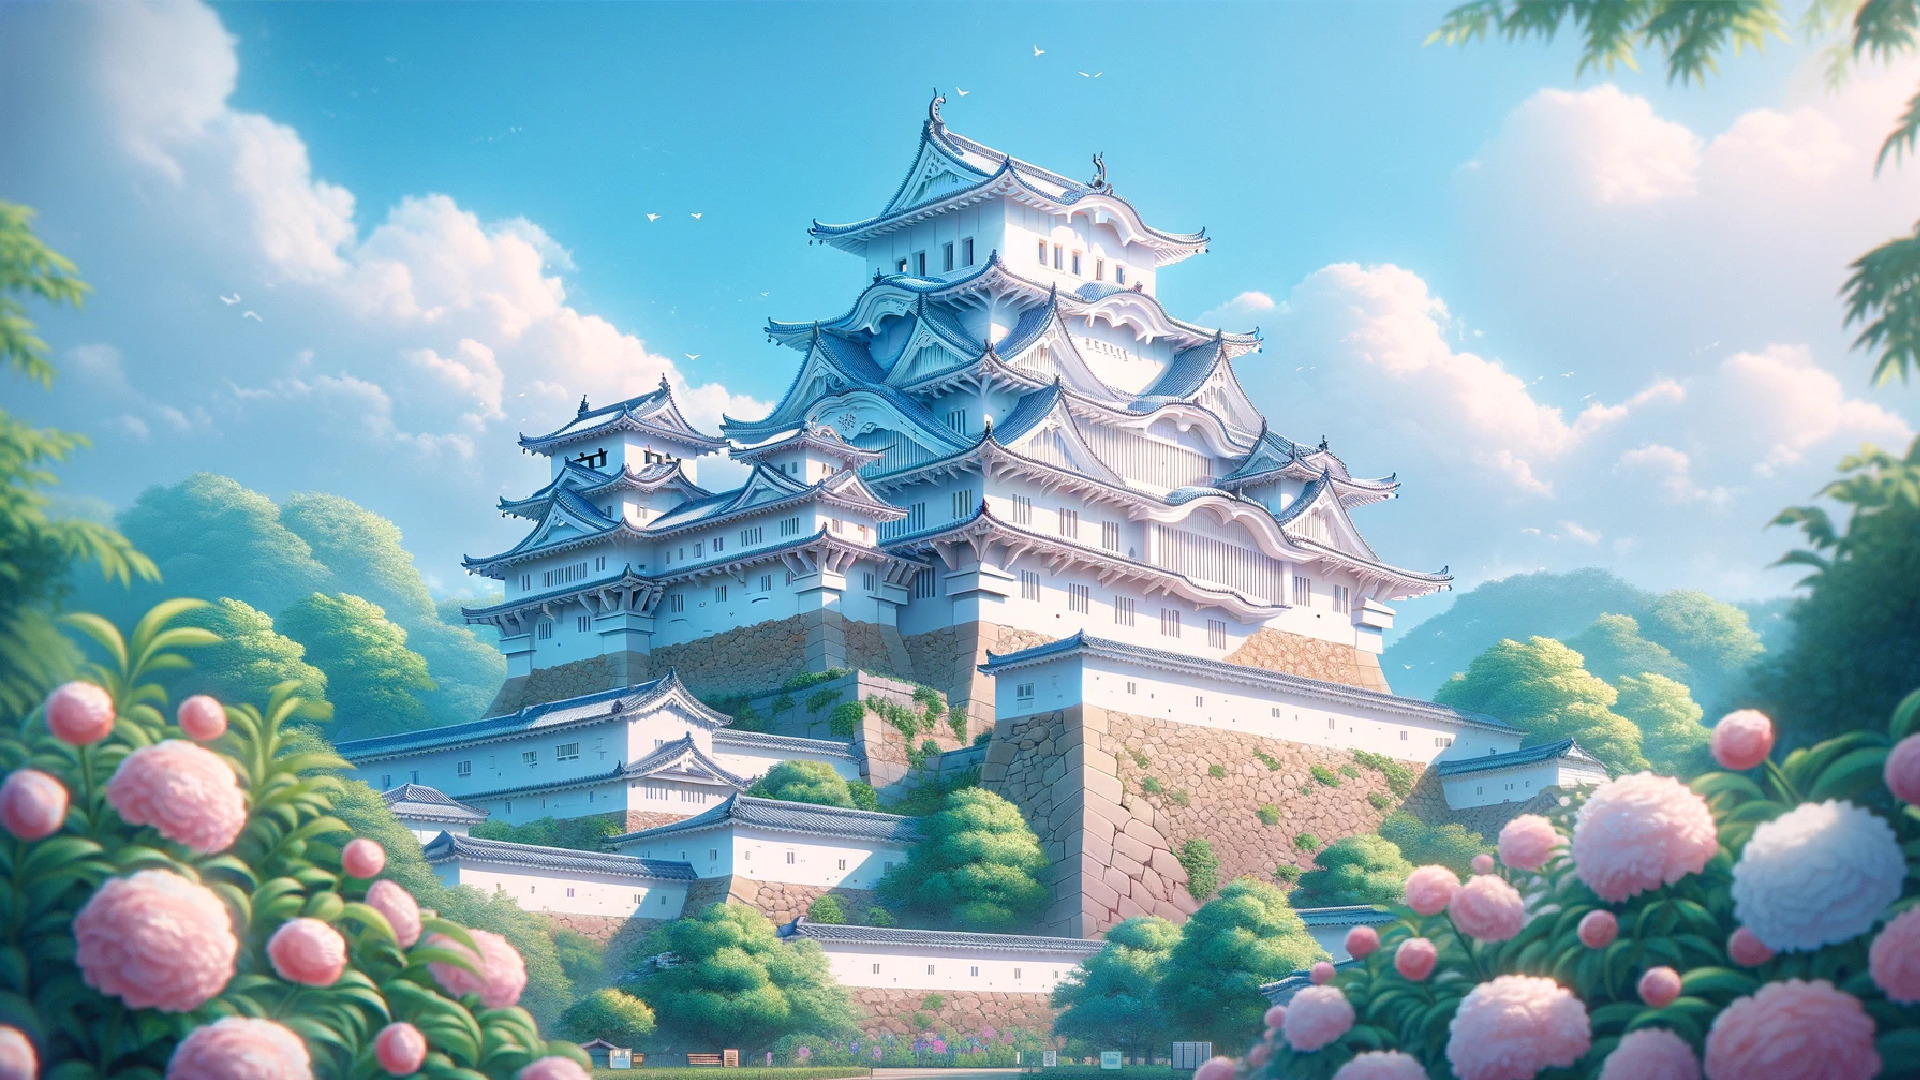 Anime Castle Close Up Graphic · Creative Fabrica